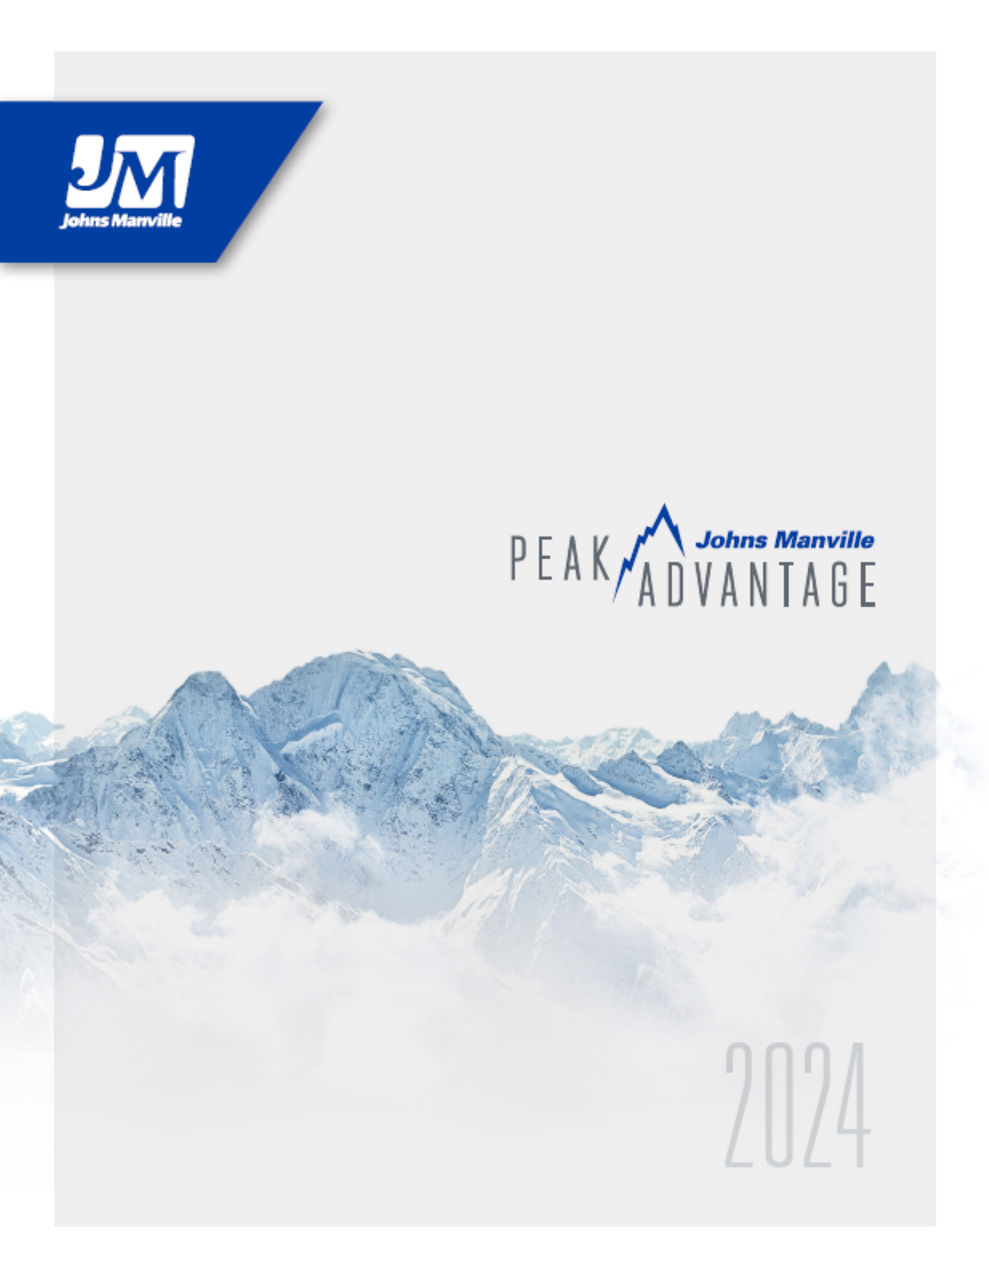 2023 JM Peak Advantage Contractor Program Brochure